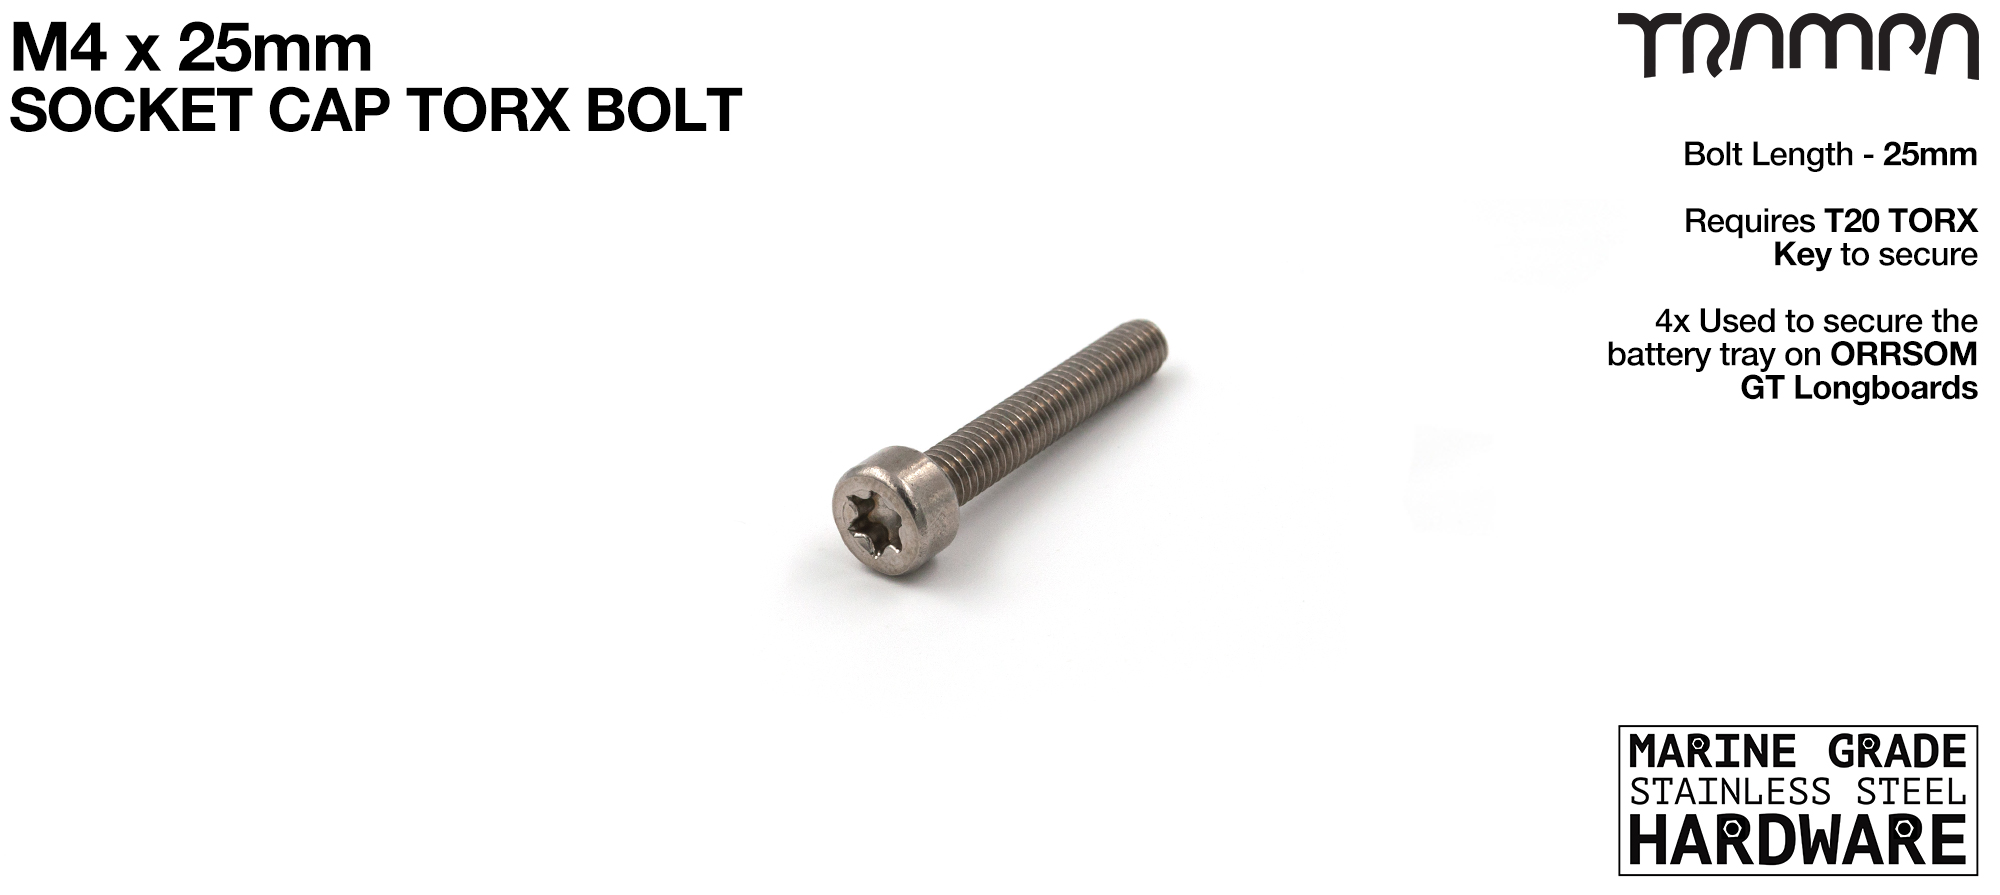 M4 x 25mm Socket Capped Head TORX Bolt ISO 4762 Marine Grade Stainless Steel 